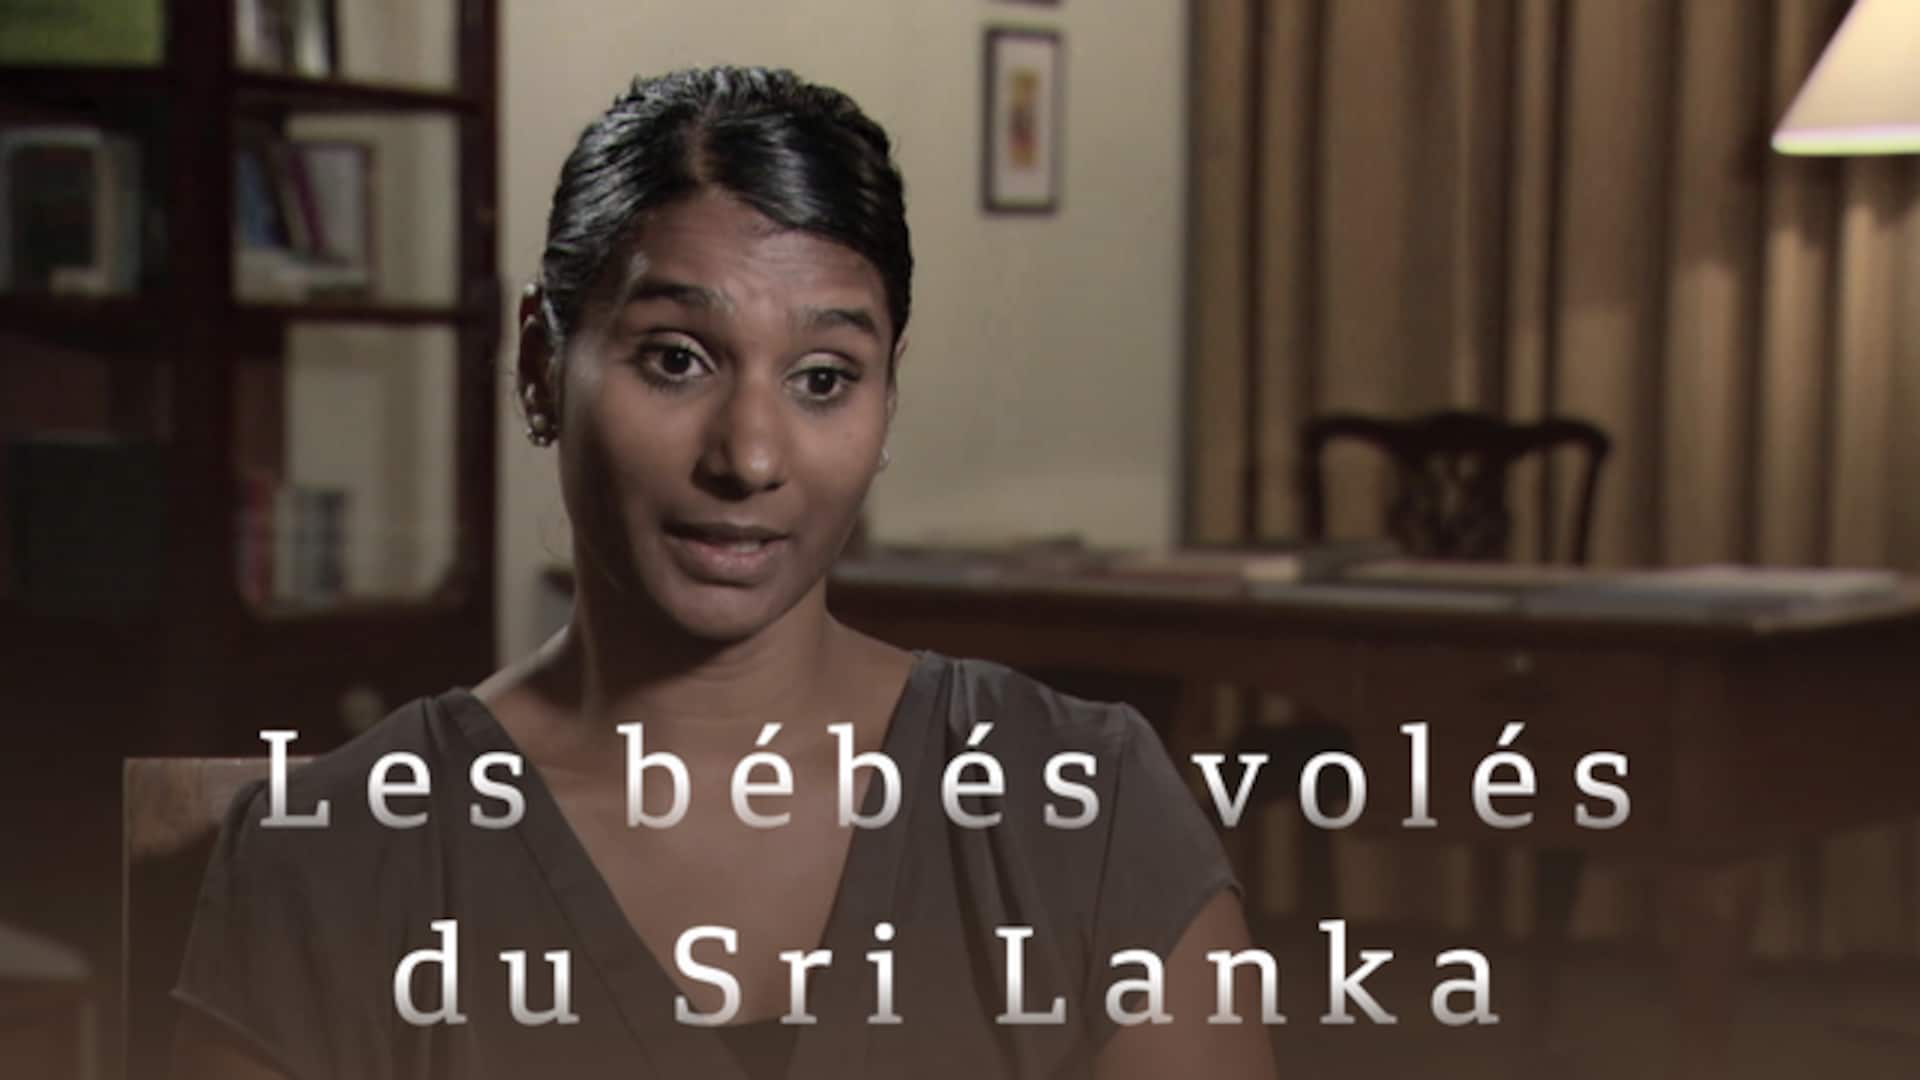 Les bébés volés du Sri Lanka